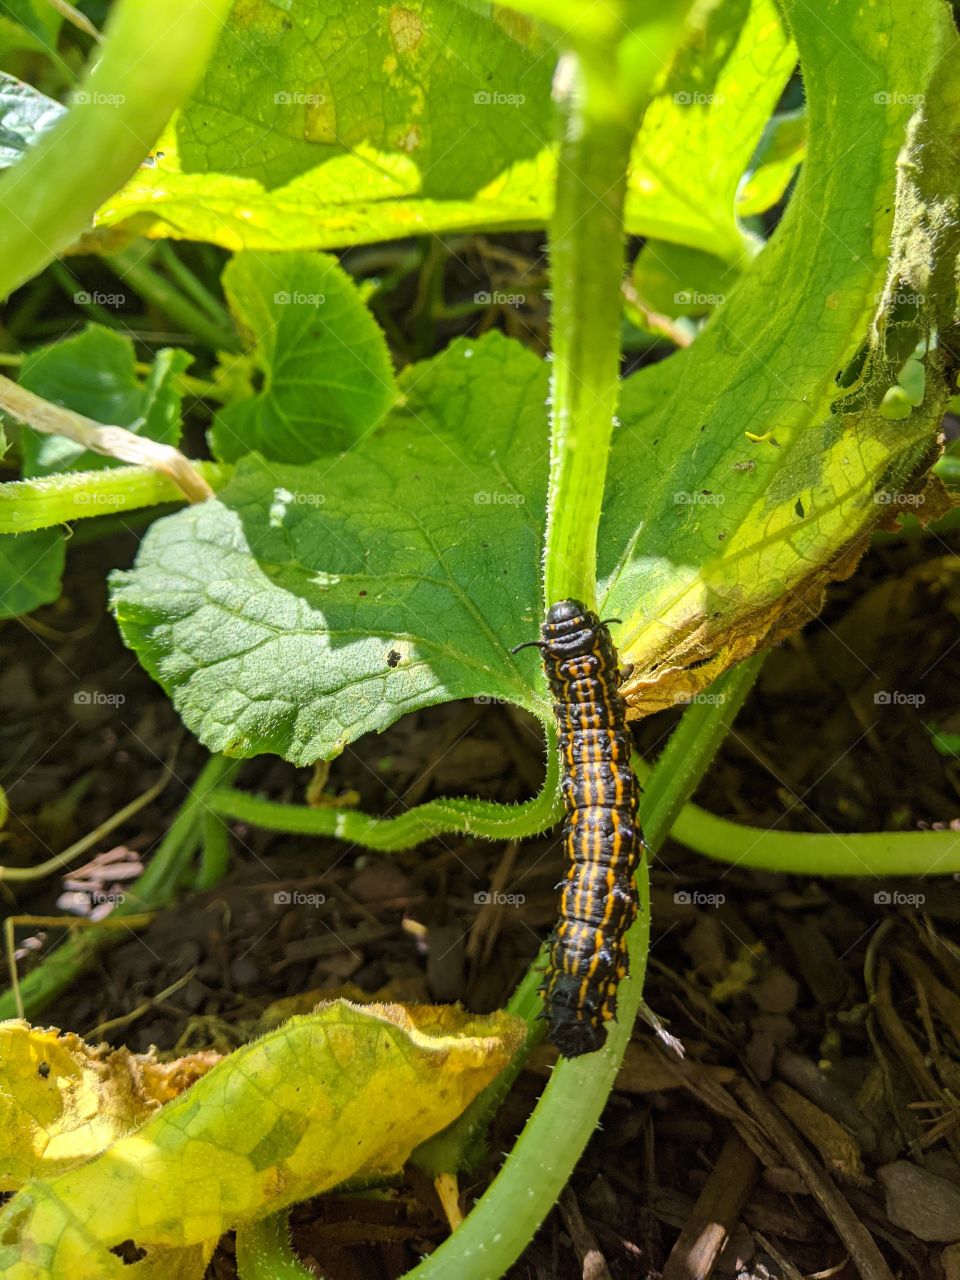 Caterpillar on cucumber leaves